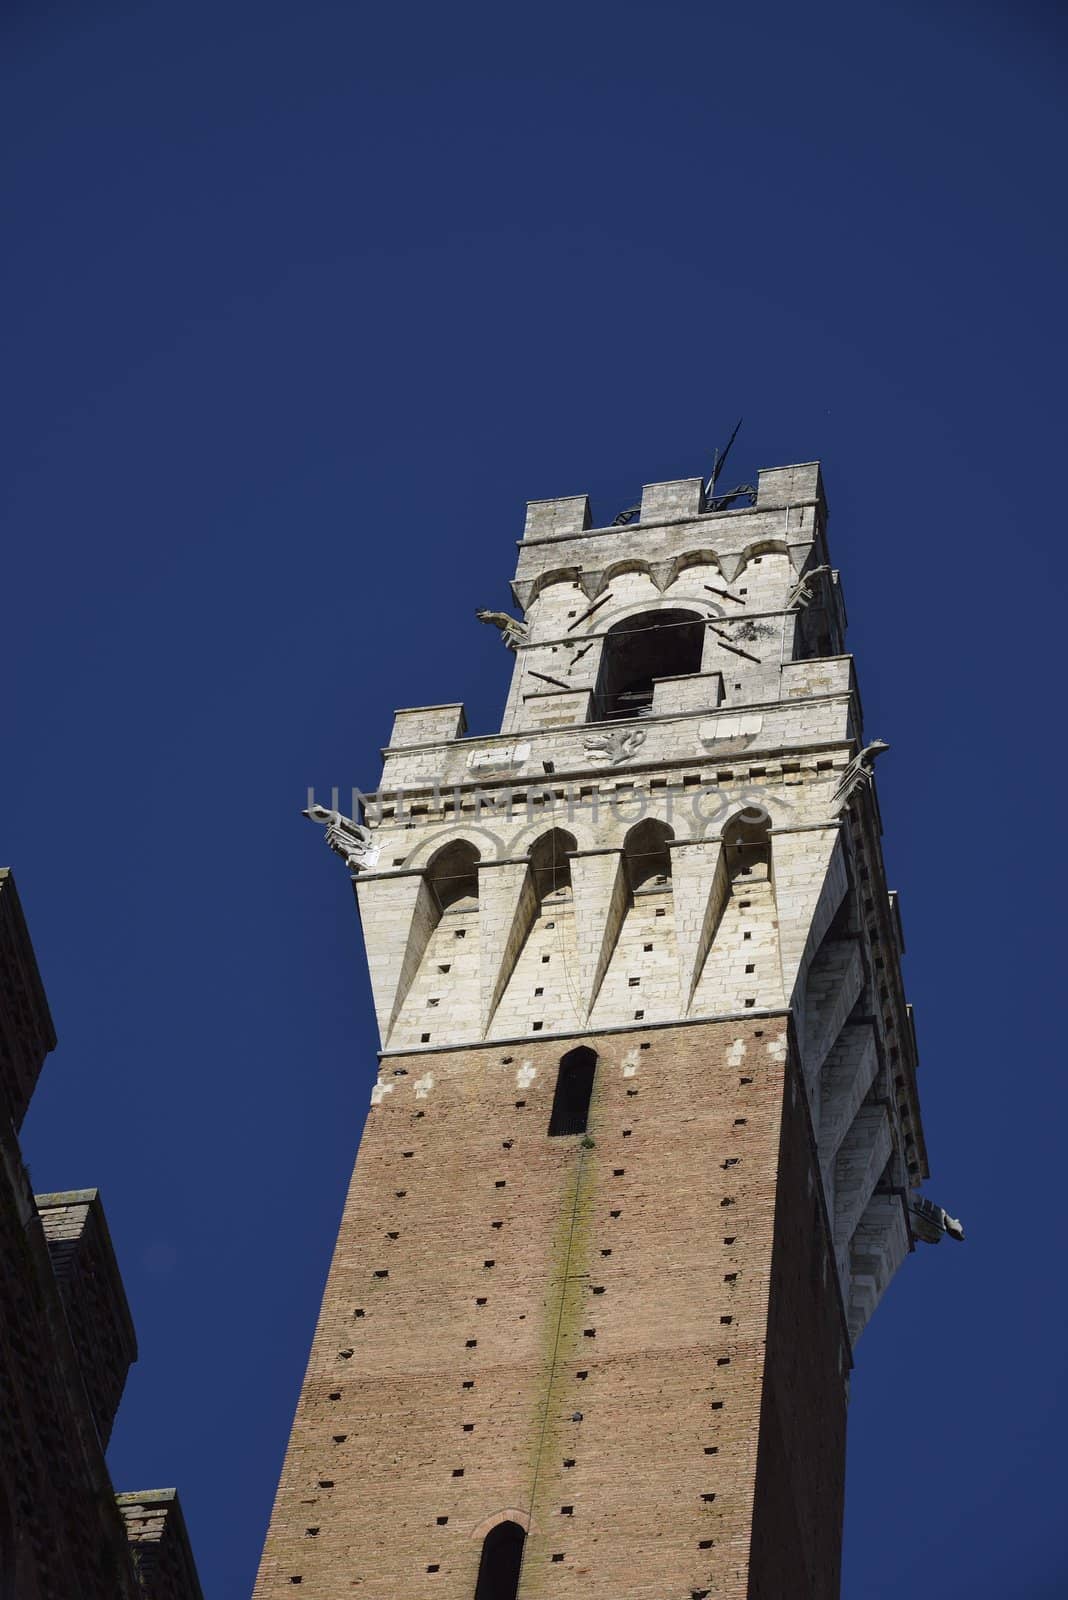 Torre del Mangia (Siena) by mizio1970